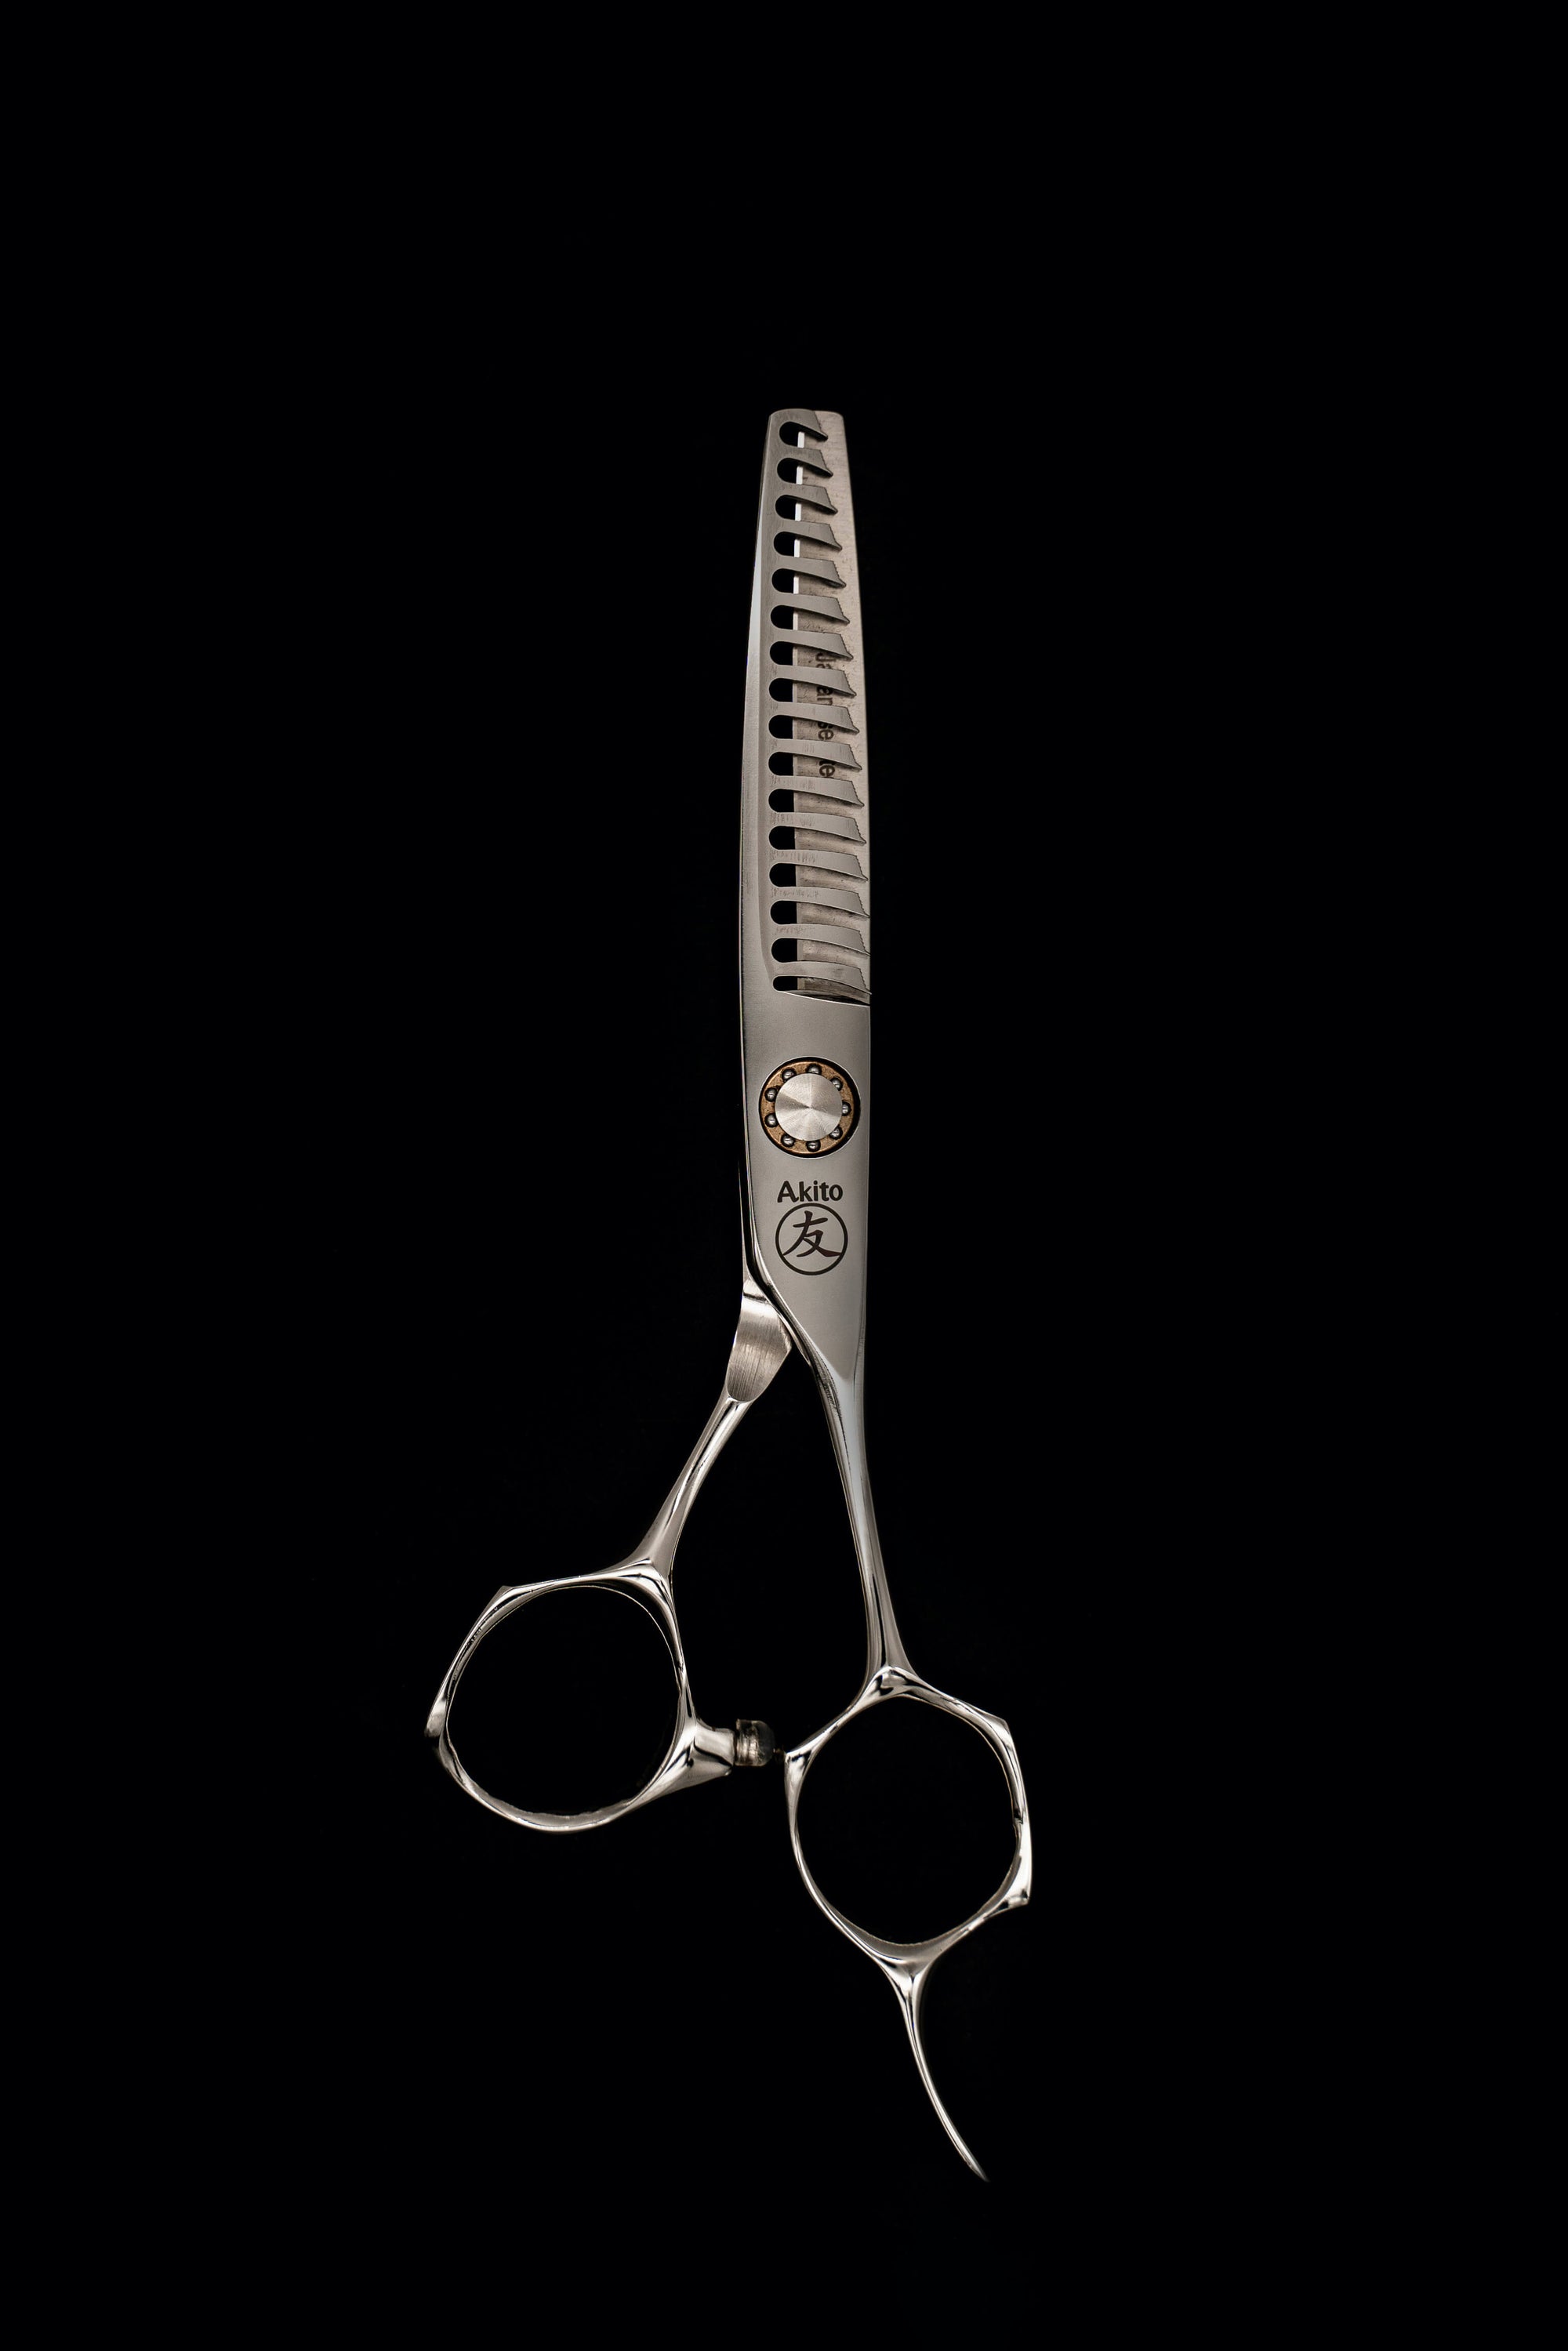 TX-01 6.0 16T scissors on black